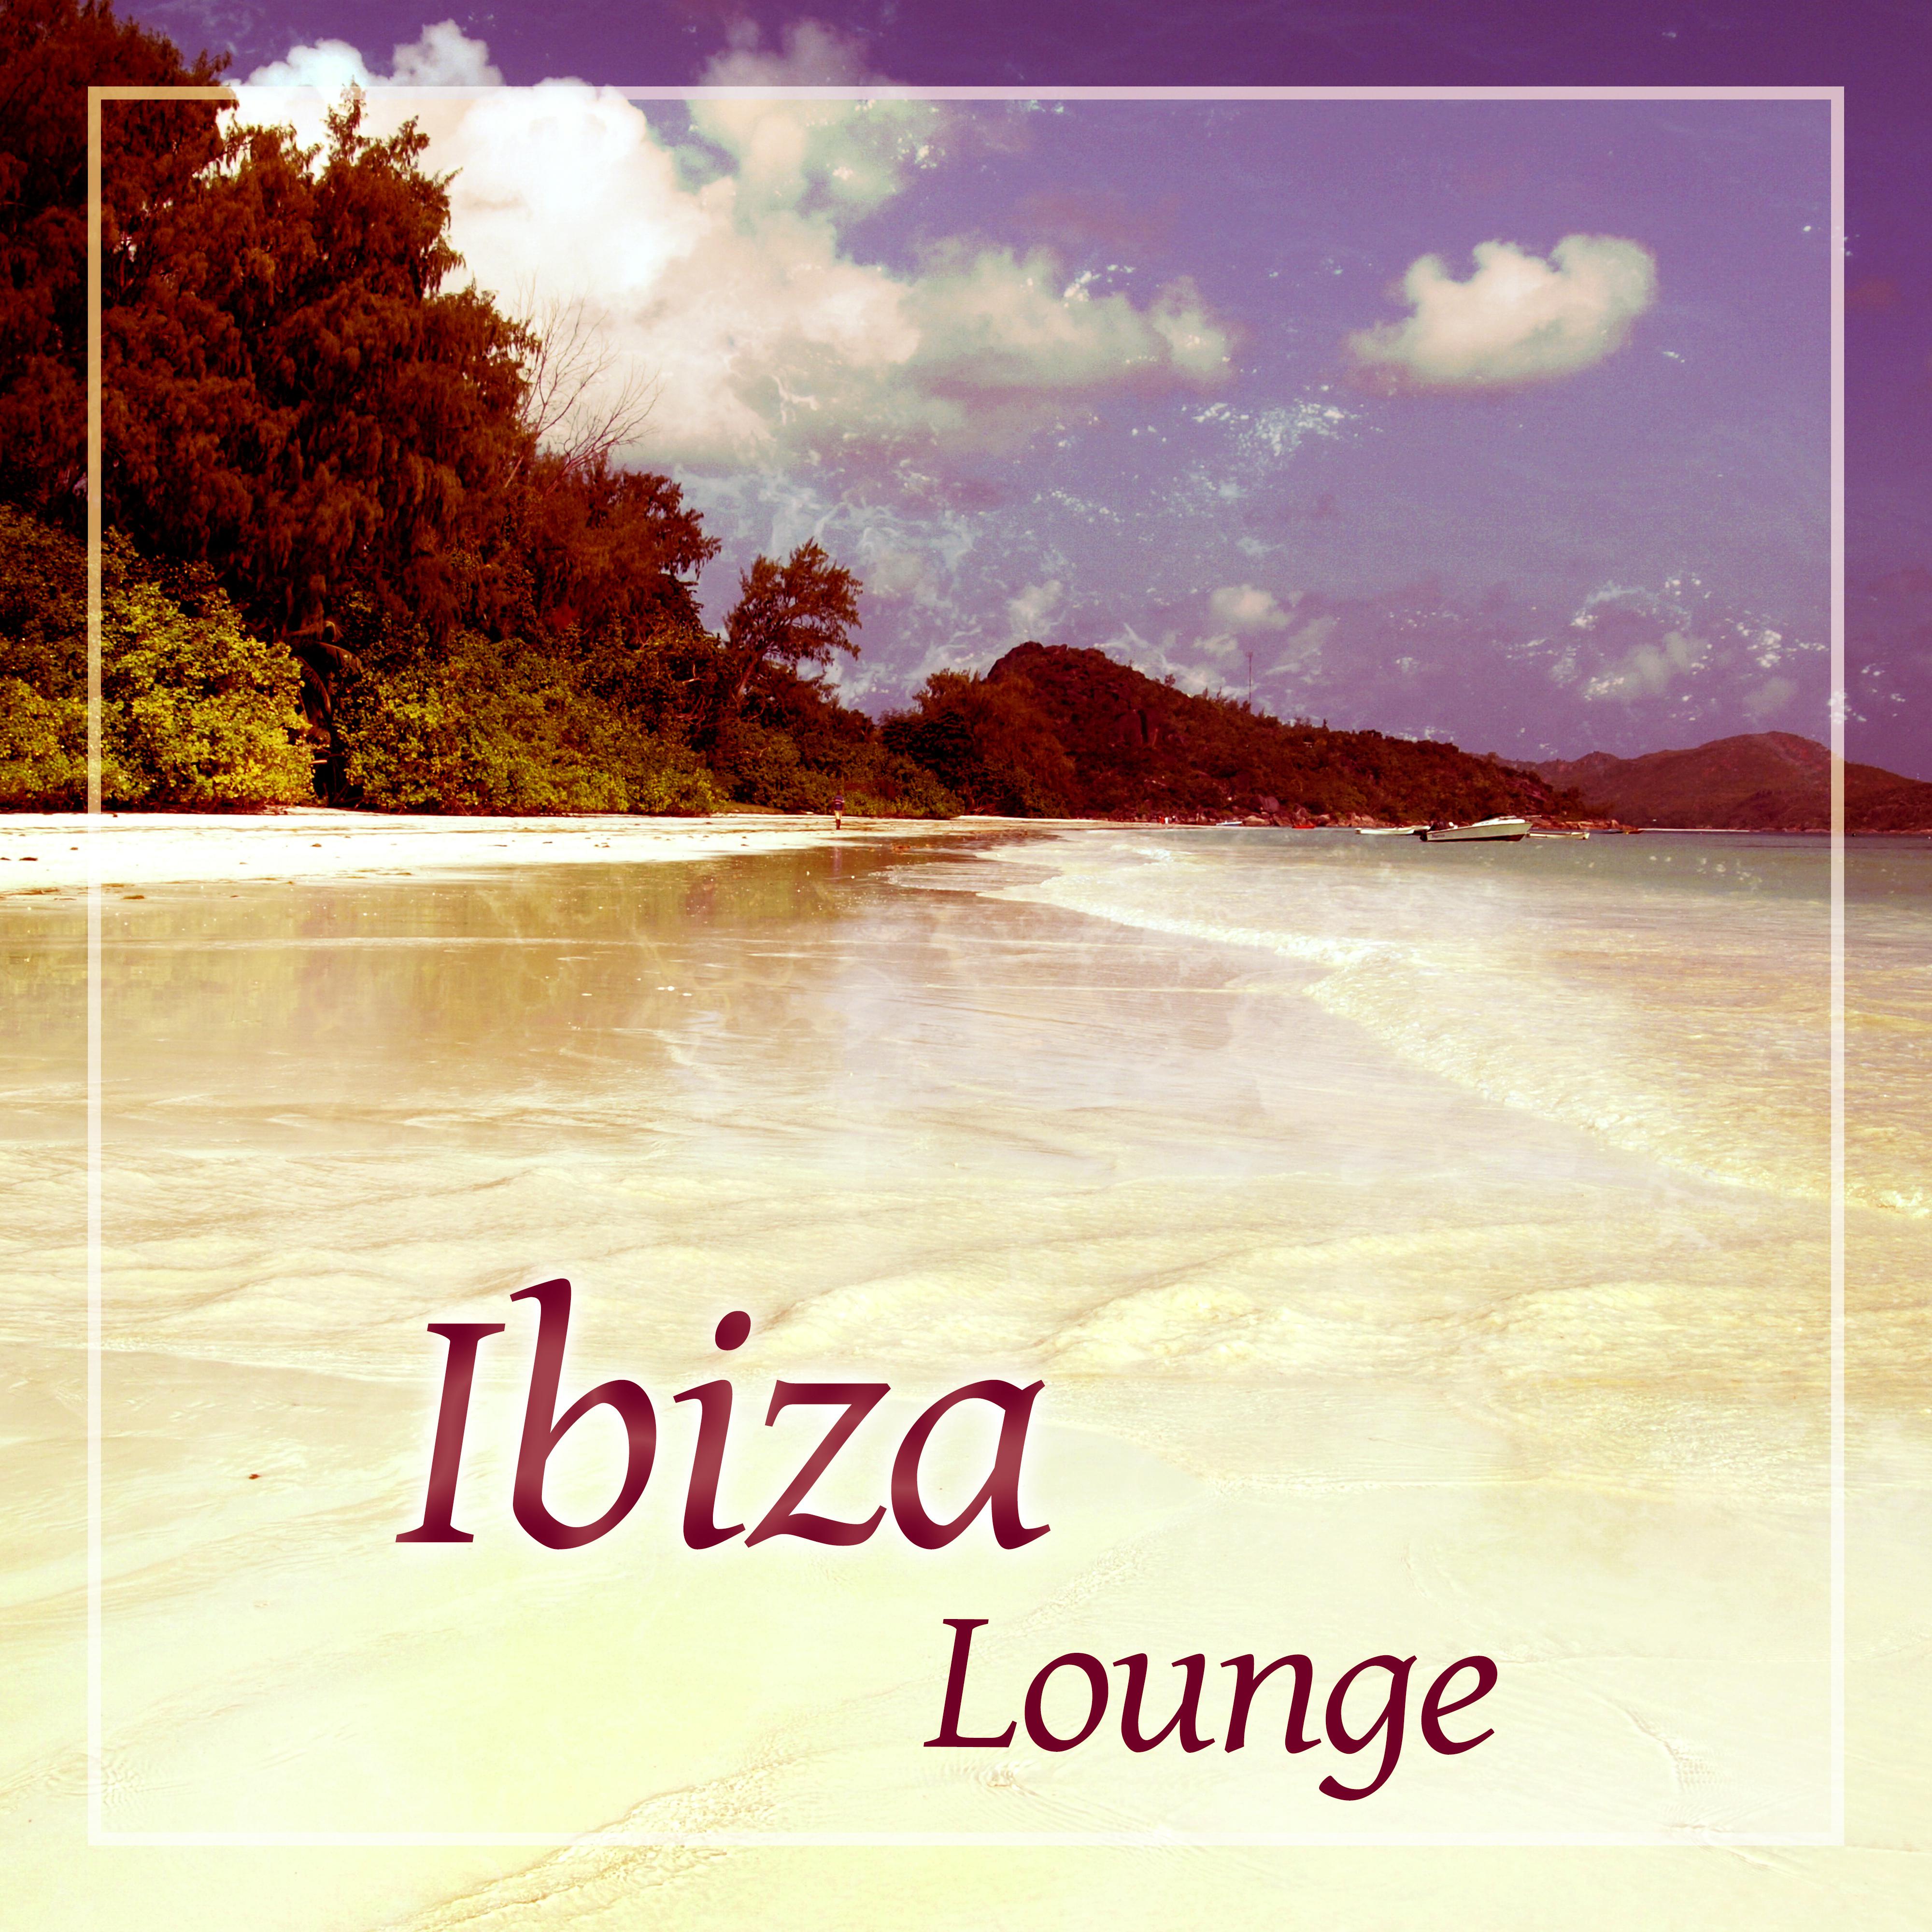 Ibiza Lounge  Born to Chill, Bossa Chill Out, Sunrise, Beach Party